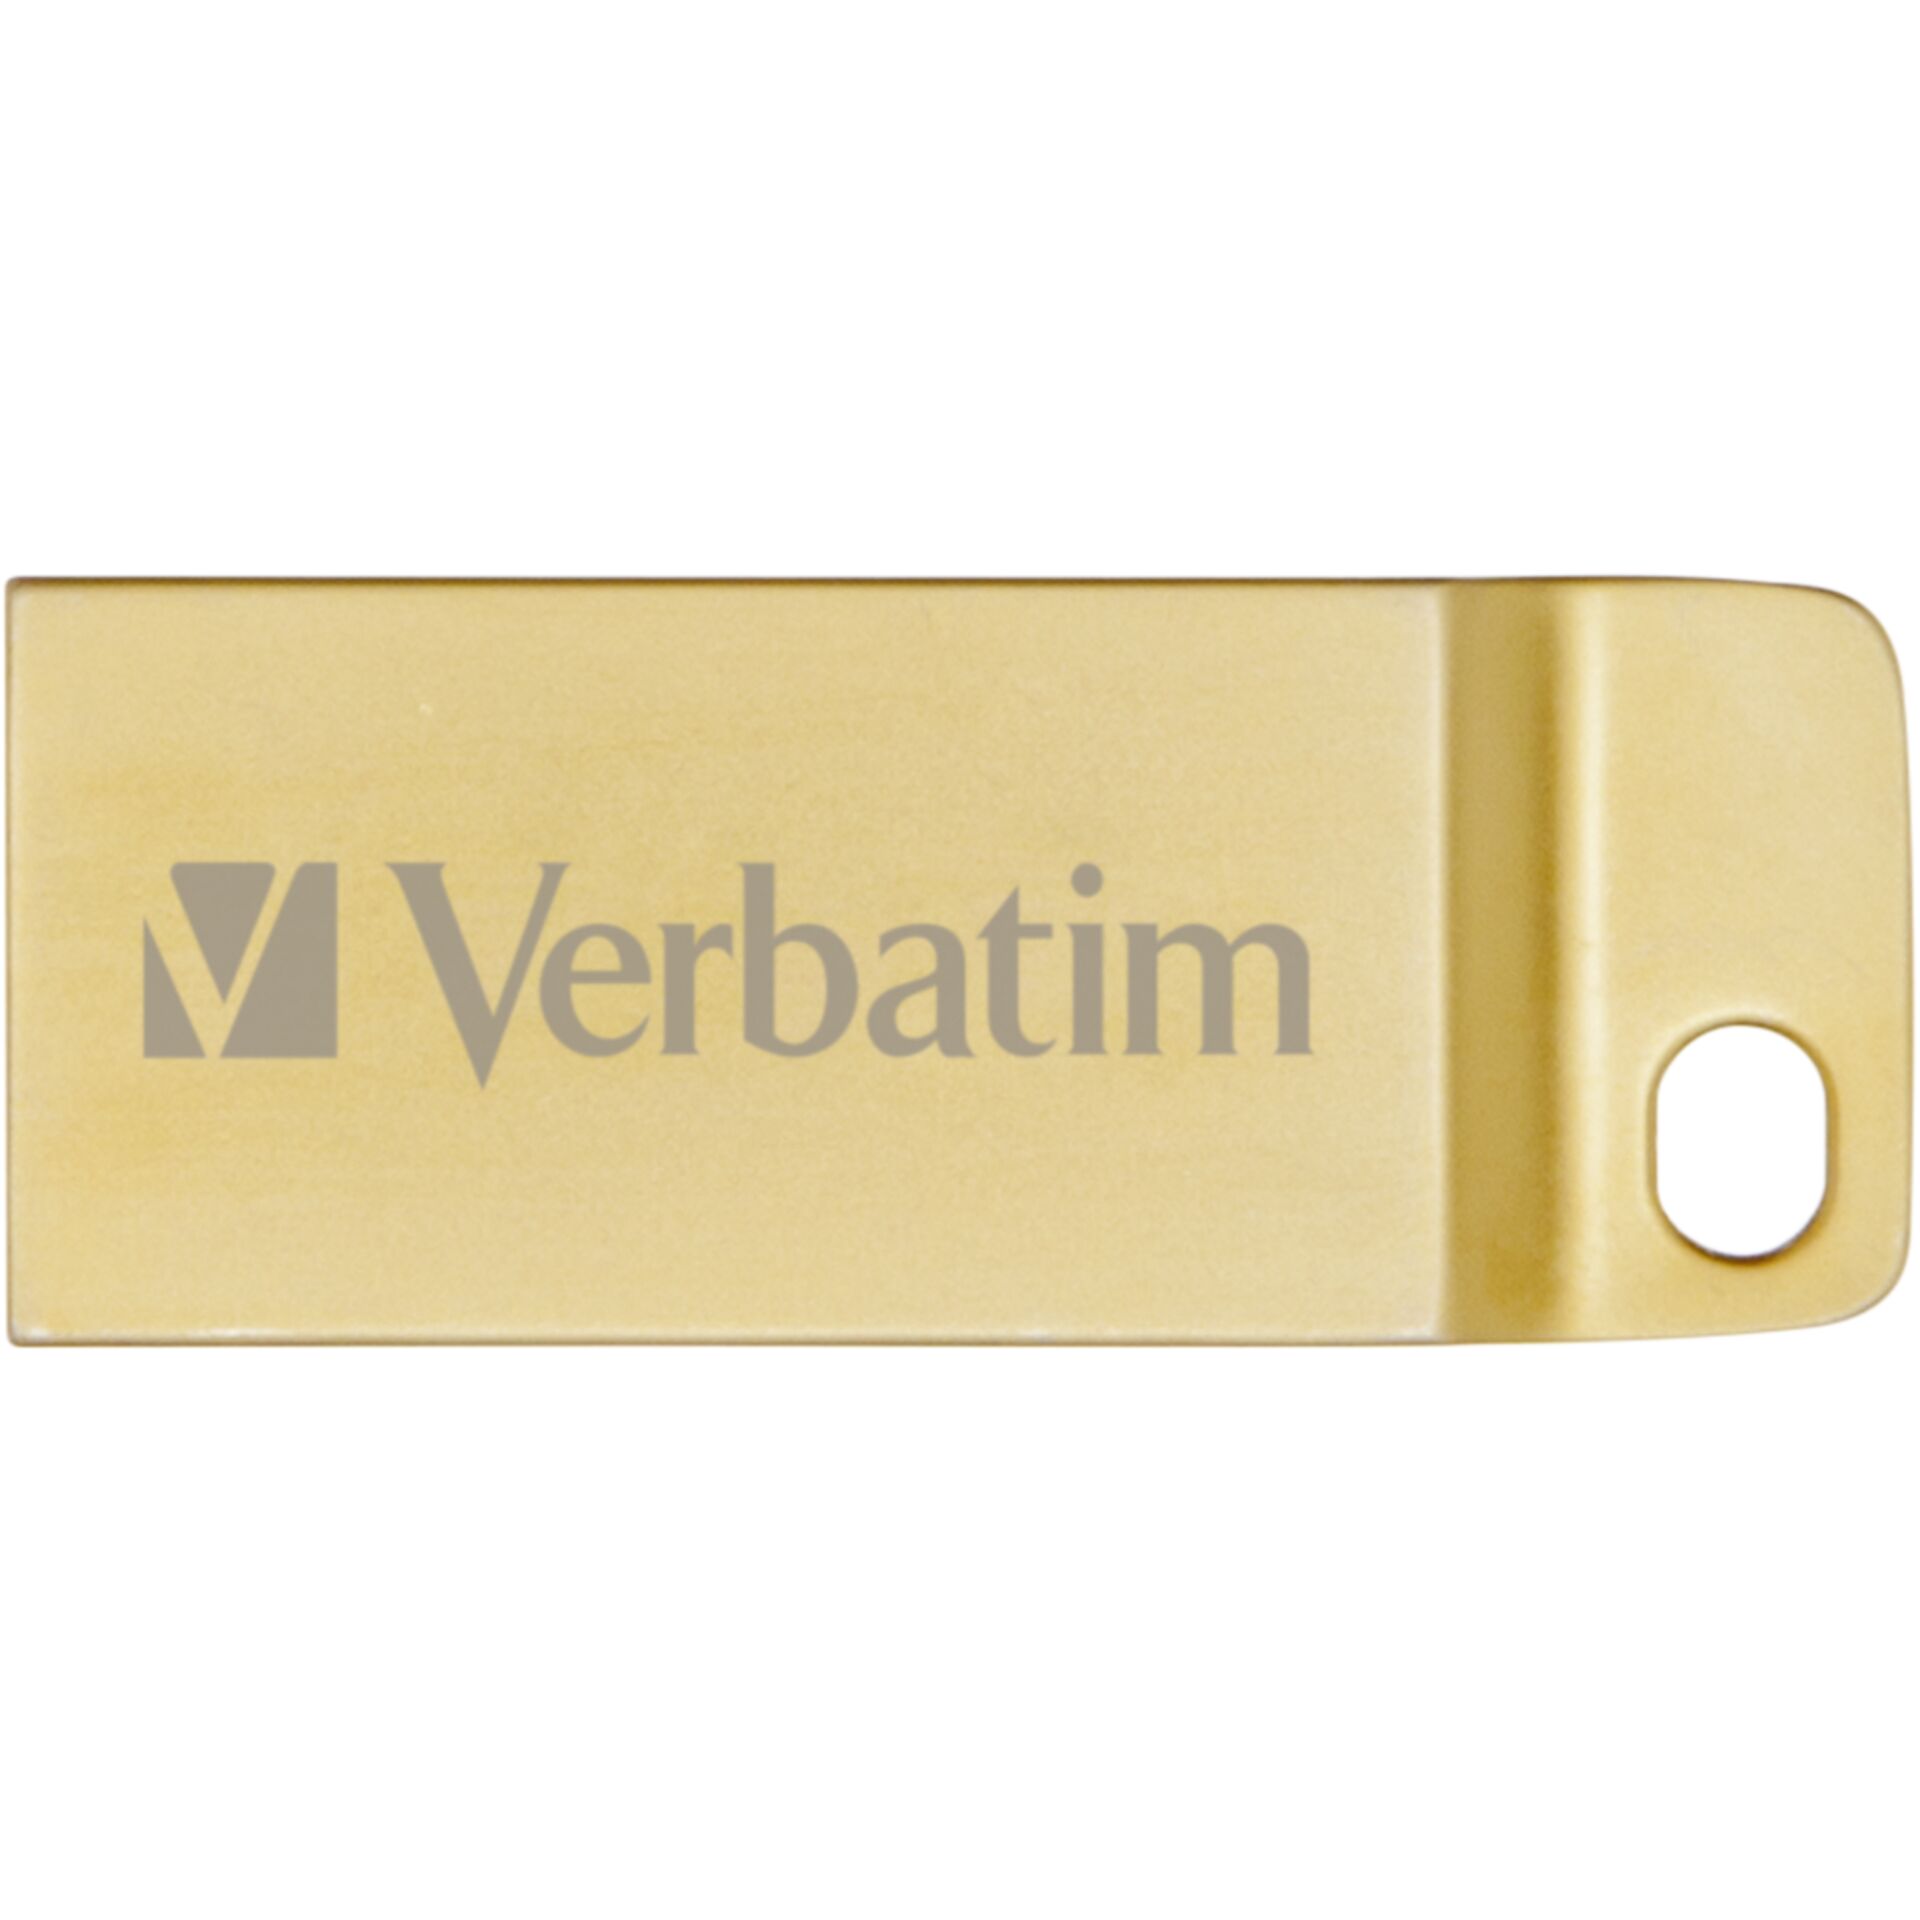 16 GB Verbatim Metal Executive gold USB-Stick, USB-A 3.0 